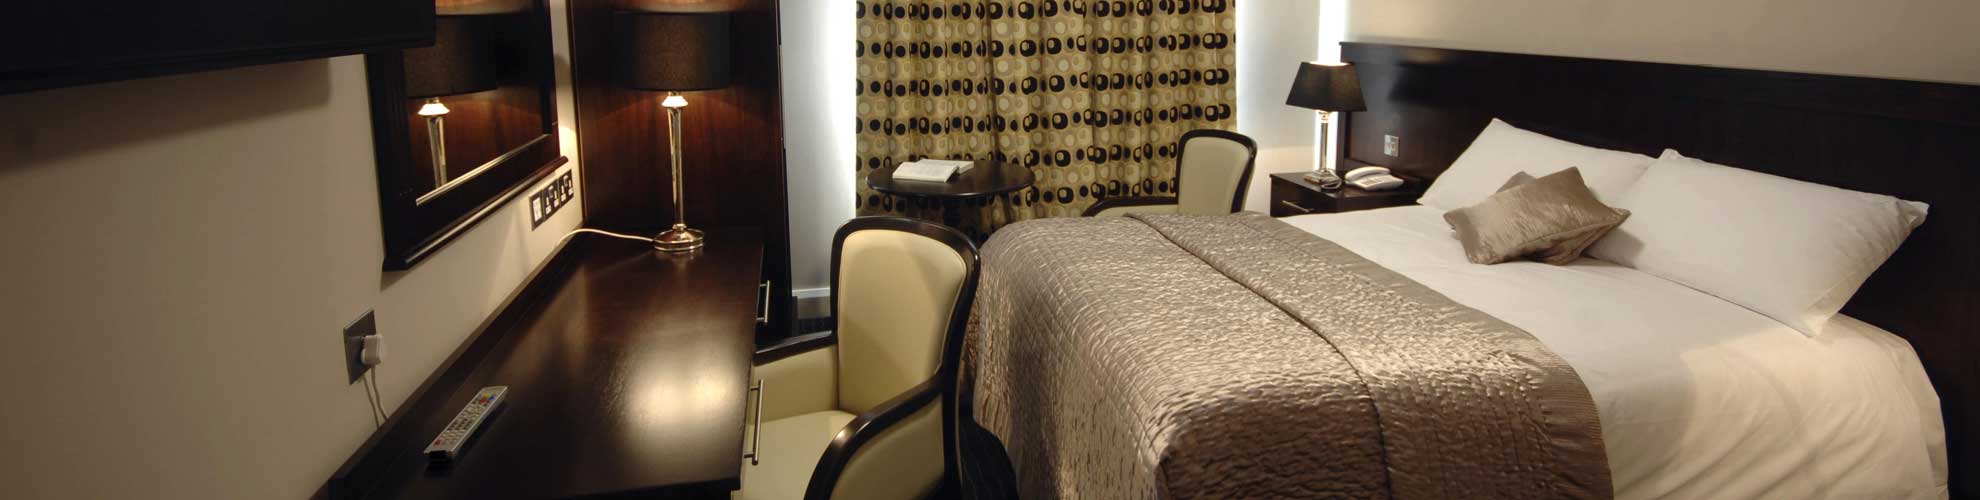 Killarney Court Hotel - Superior Bedroom